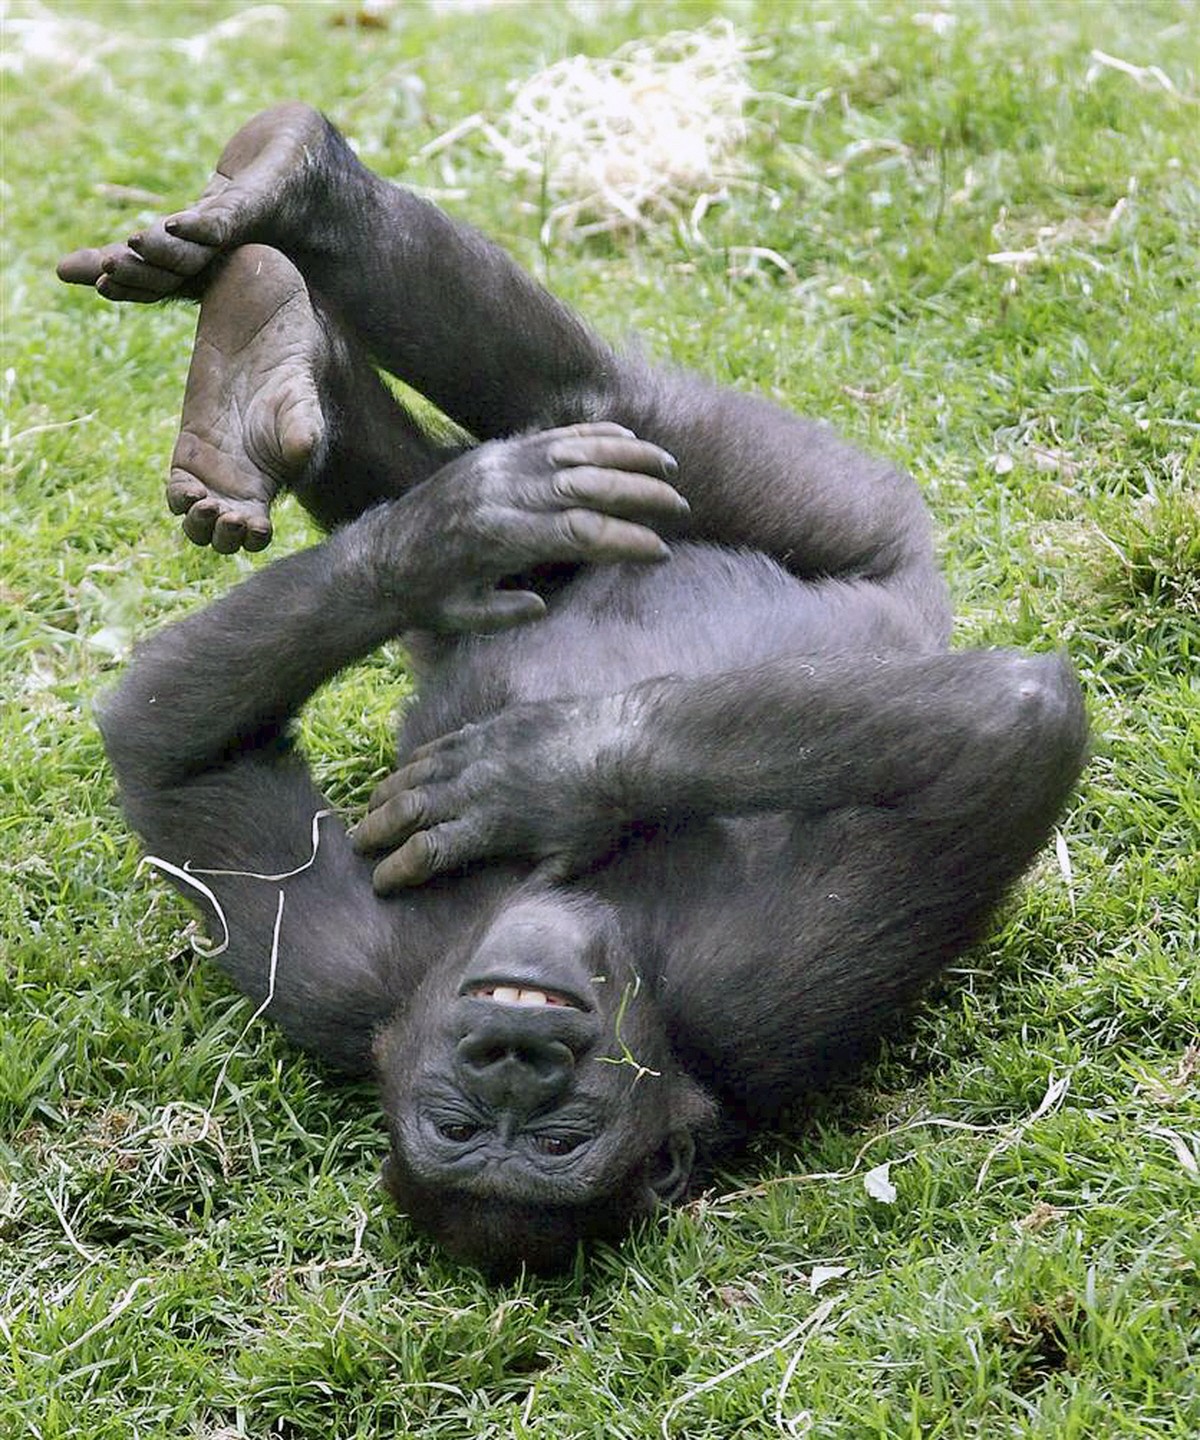 00-0d-laughing-animals-08-06-12-gorilla.jpg